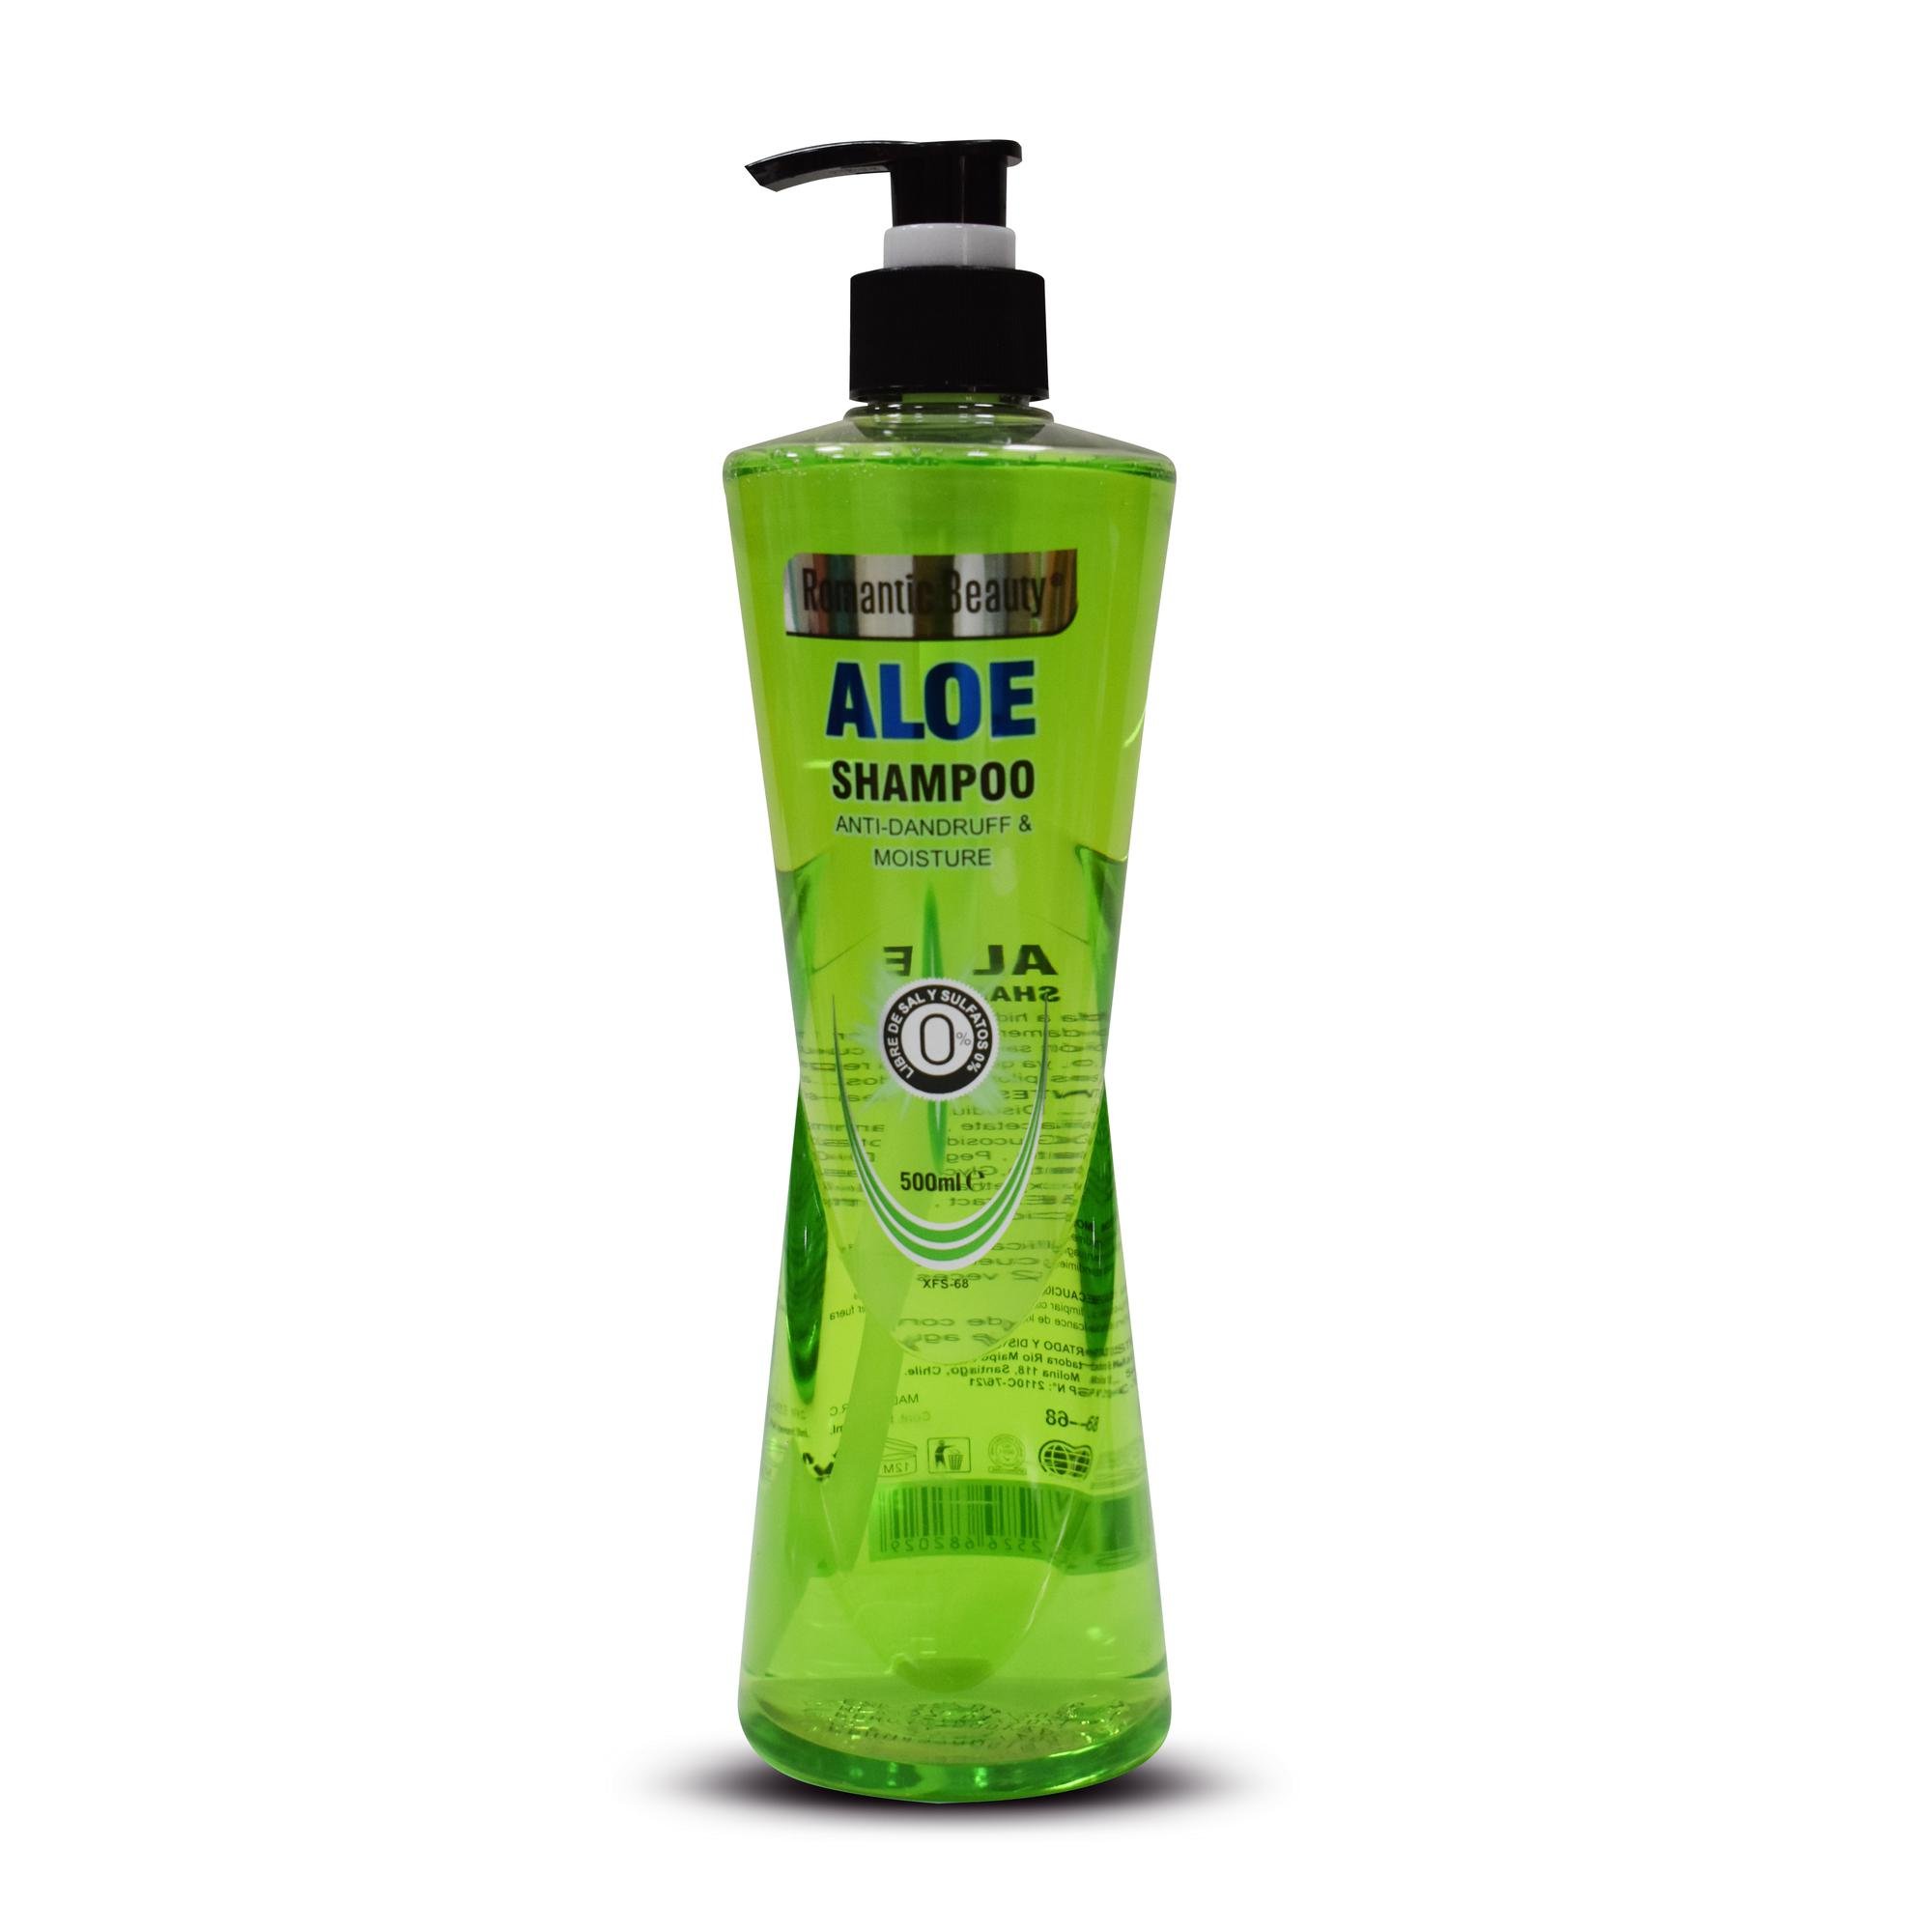 ALOE  – Shampoo Anti-dandruff & Moisture. 500ML.